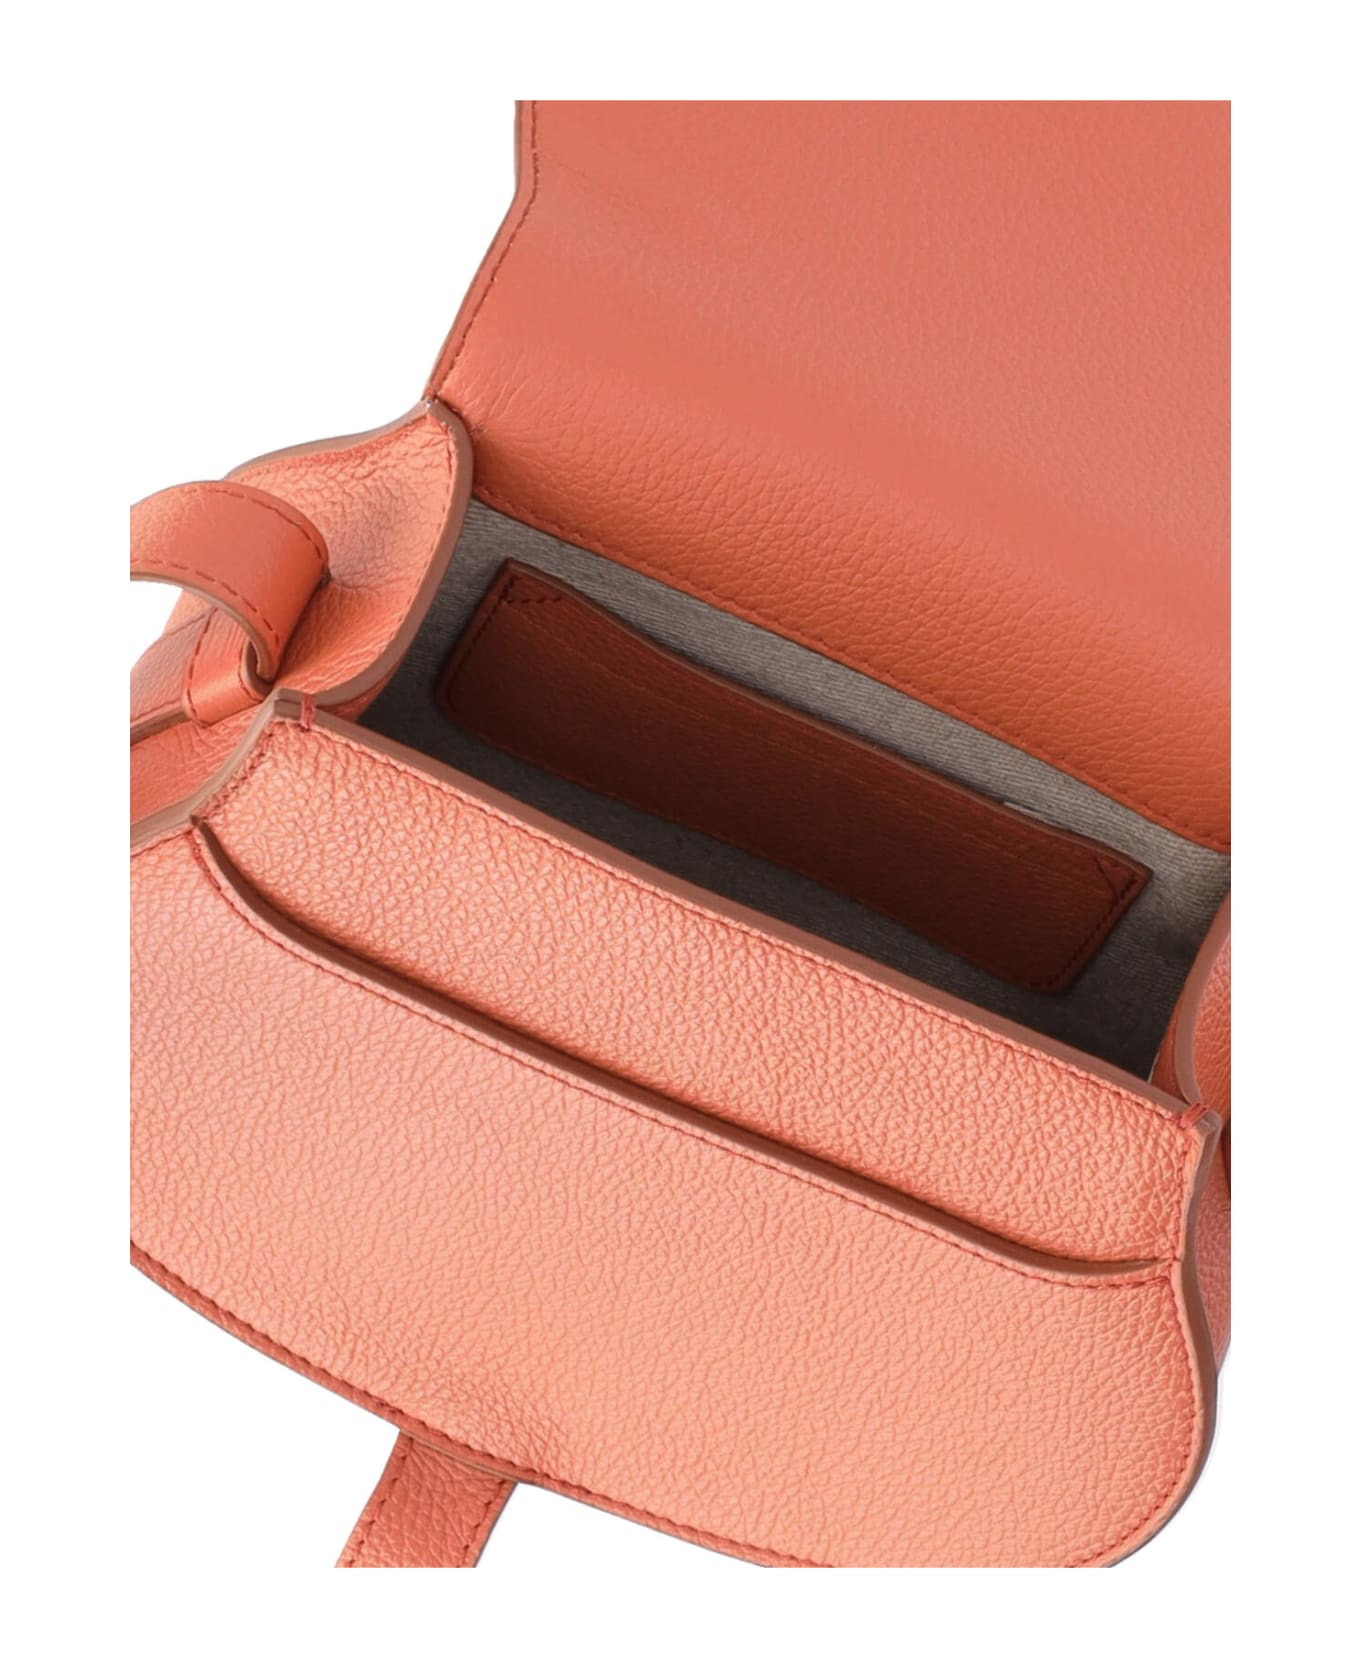 Chloé Mercie Shoulder Bag In Orange Leather - Orange